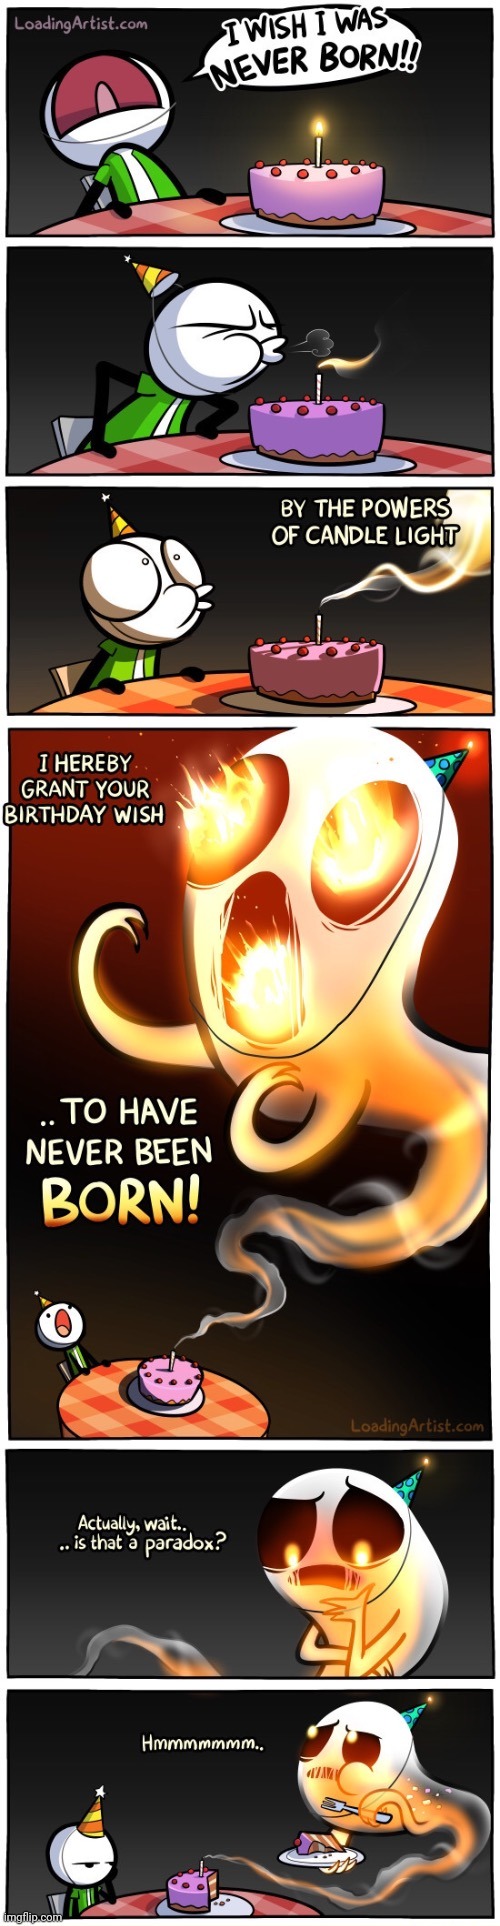 Never born | image tagged in happy birthday,birthday,cake,loading artist,comics,comics/cartoons | made w/ Imgflip meme maker